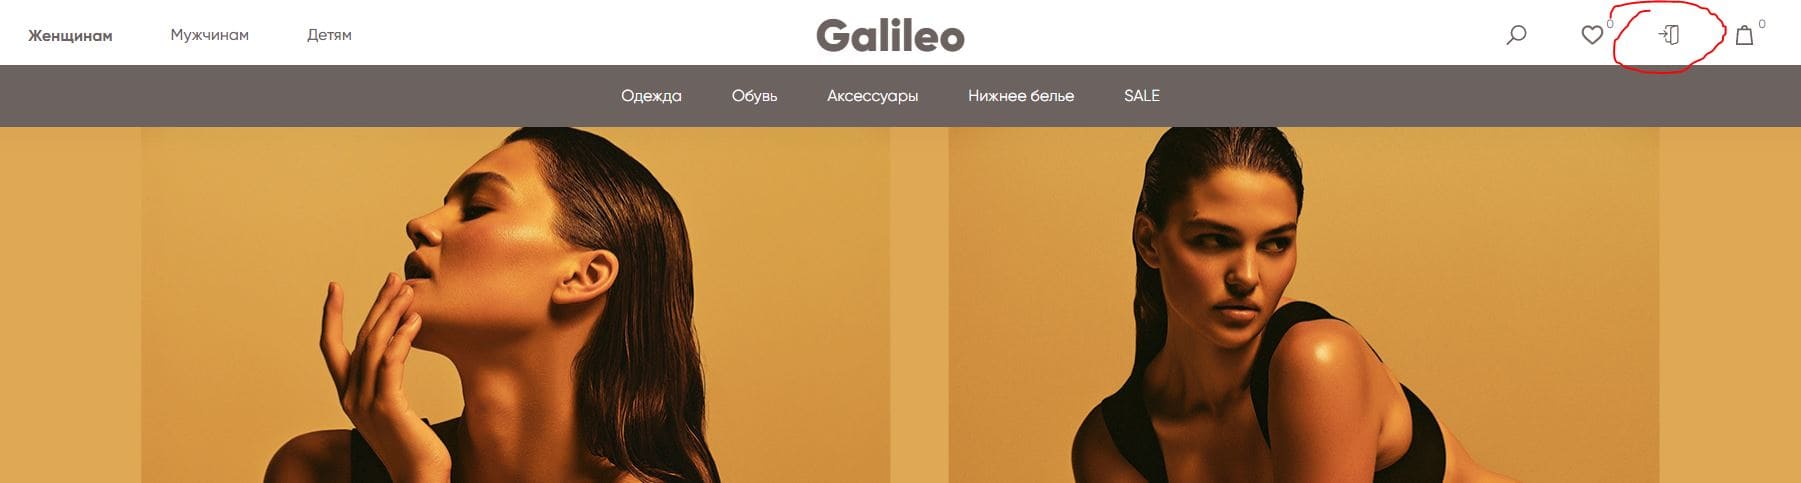 Galileoshop.by